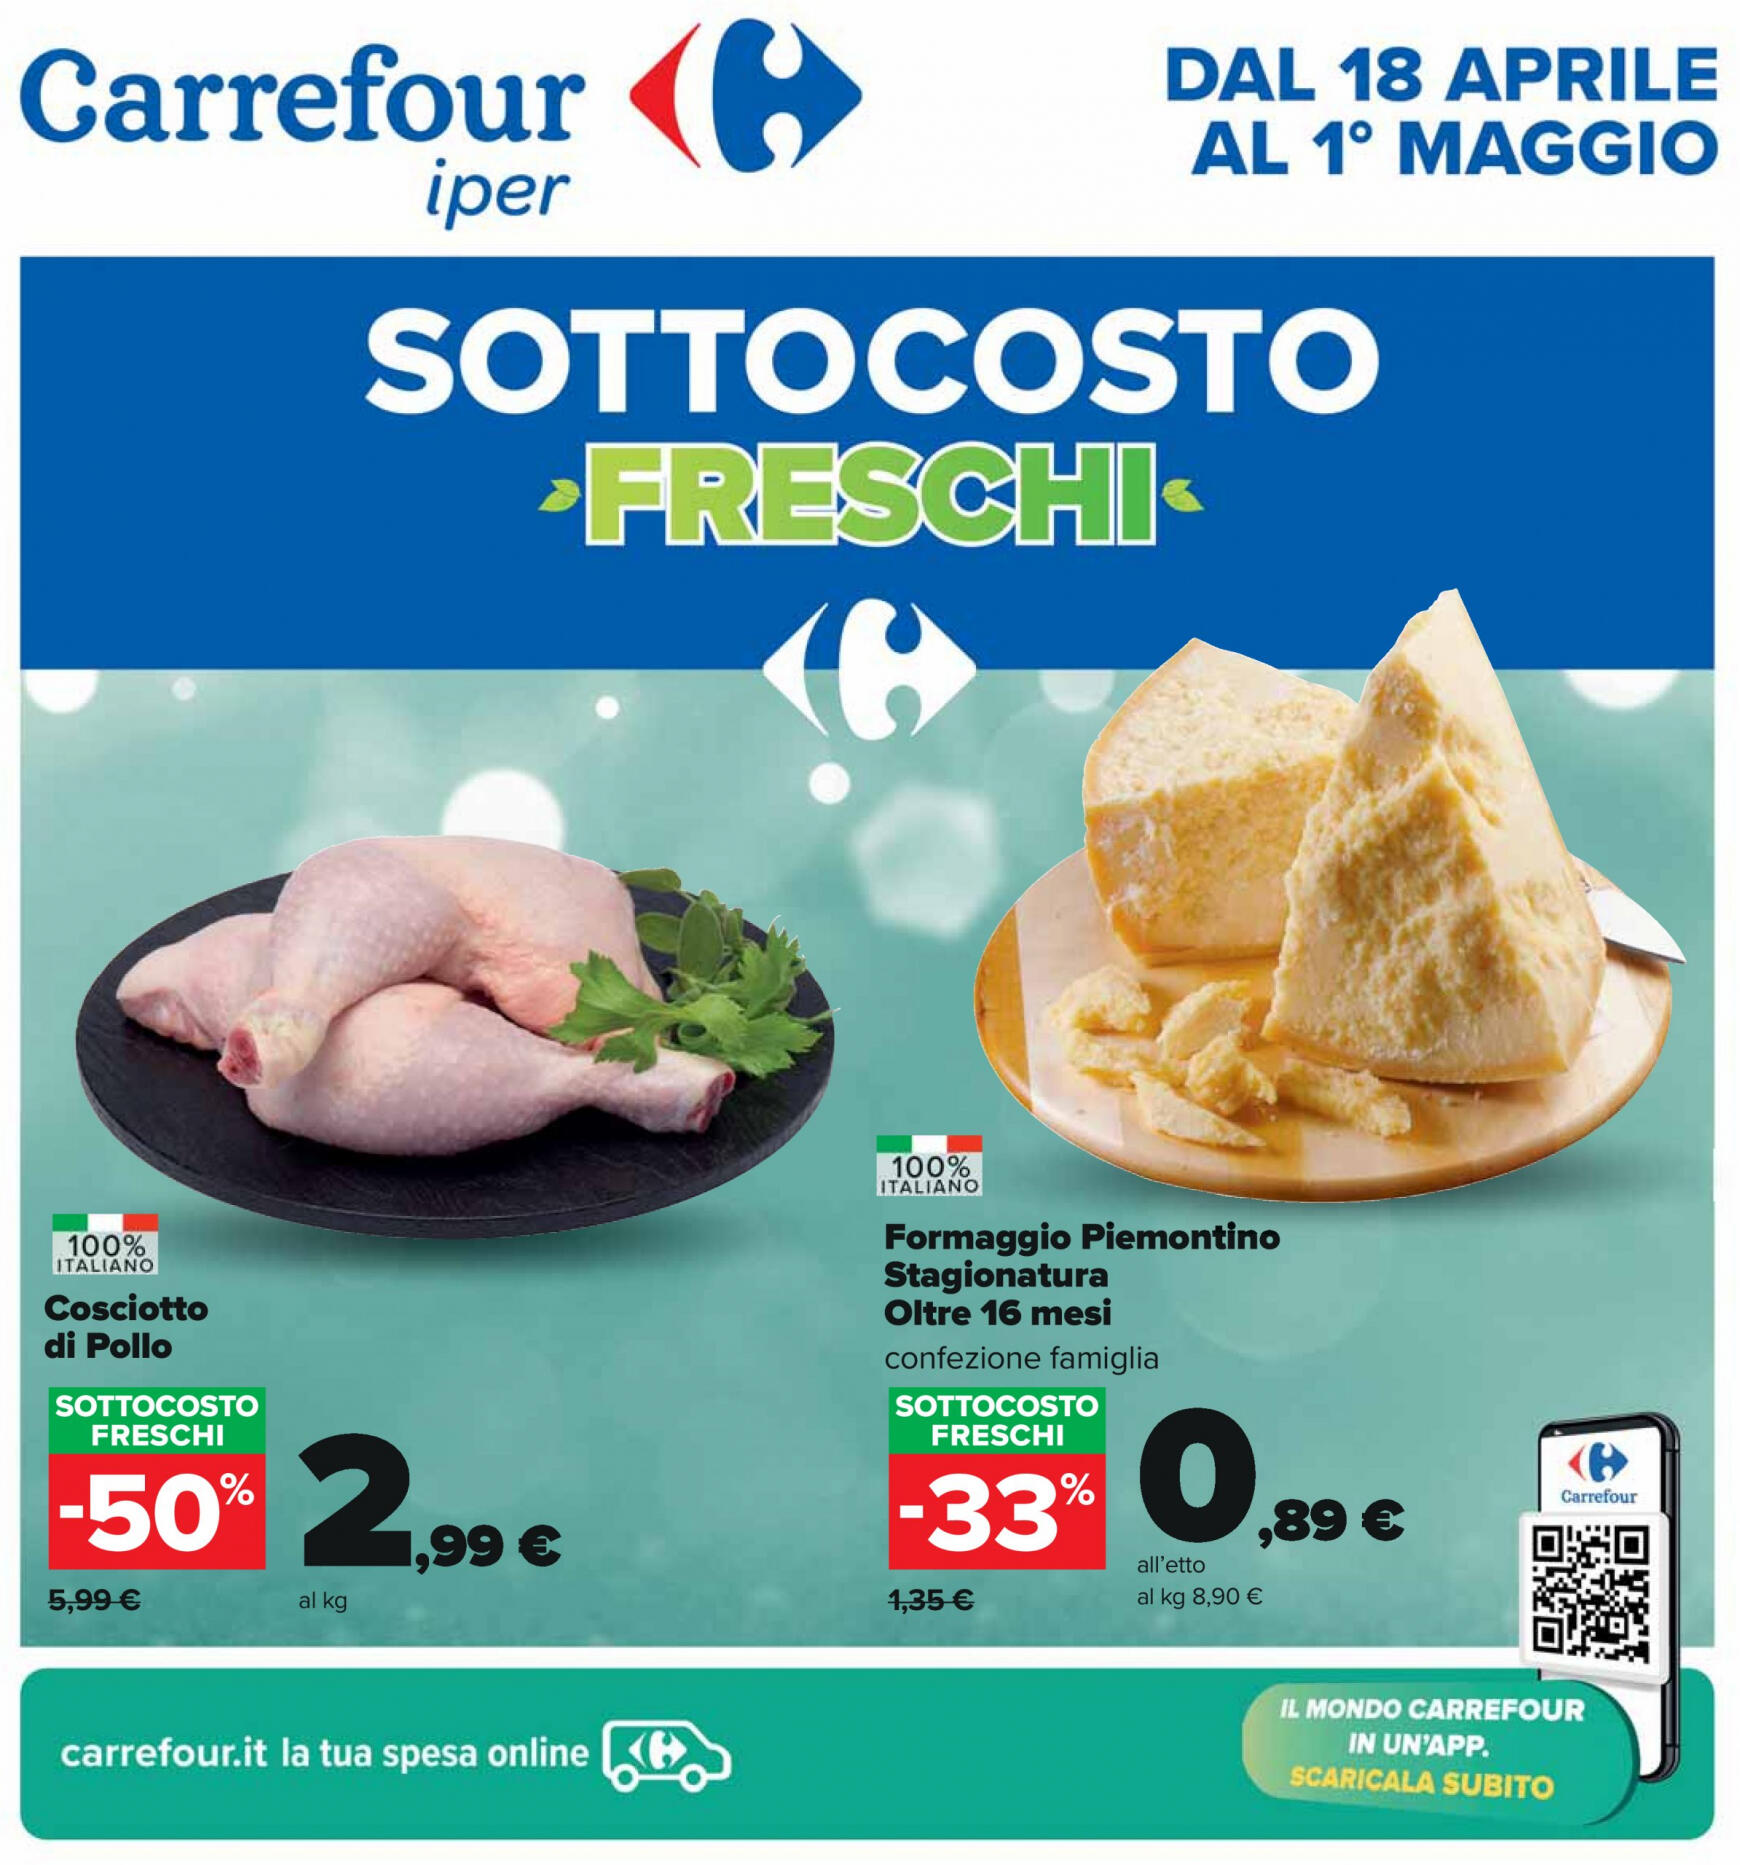 carrefour - Nuovo volantino Carrefour 18.04. - 01.05.